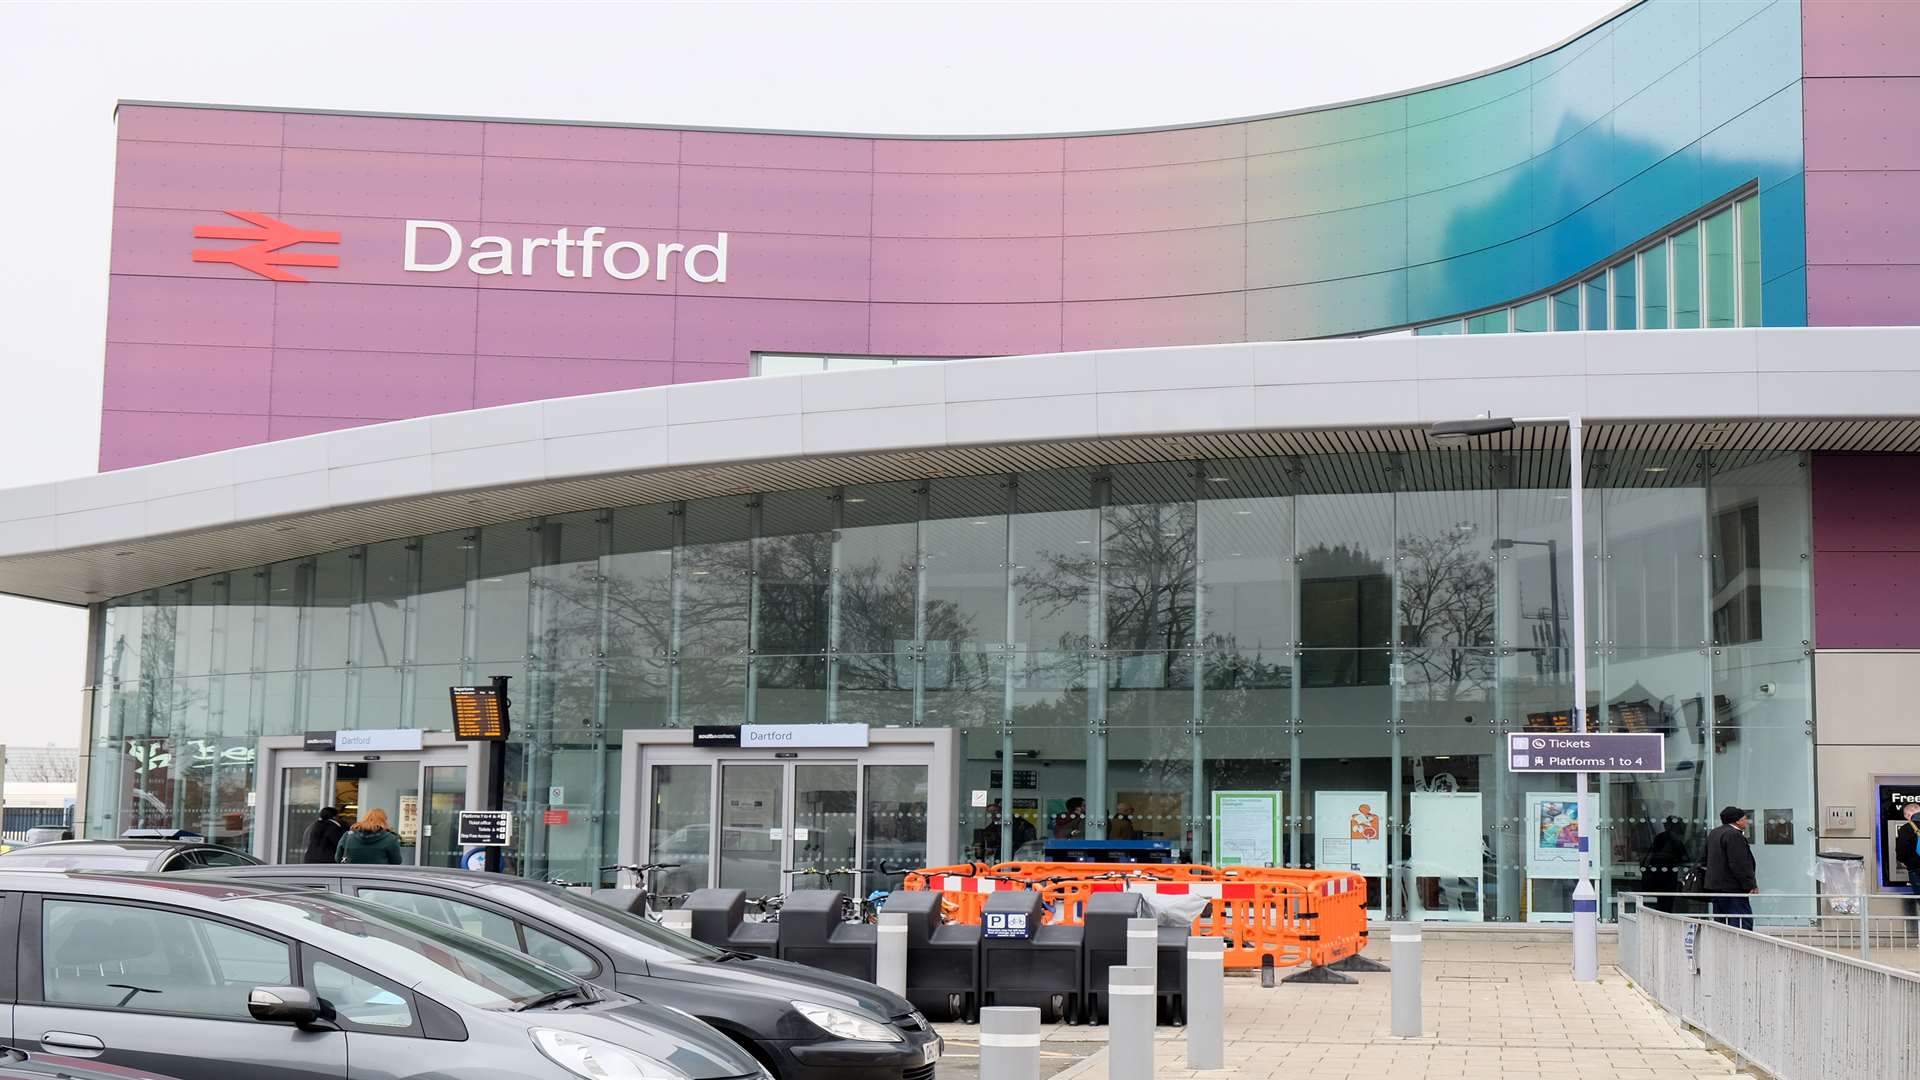 Dartford station